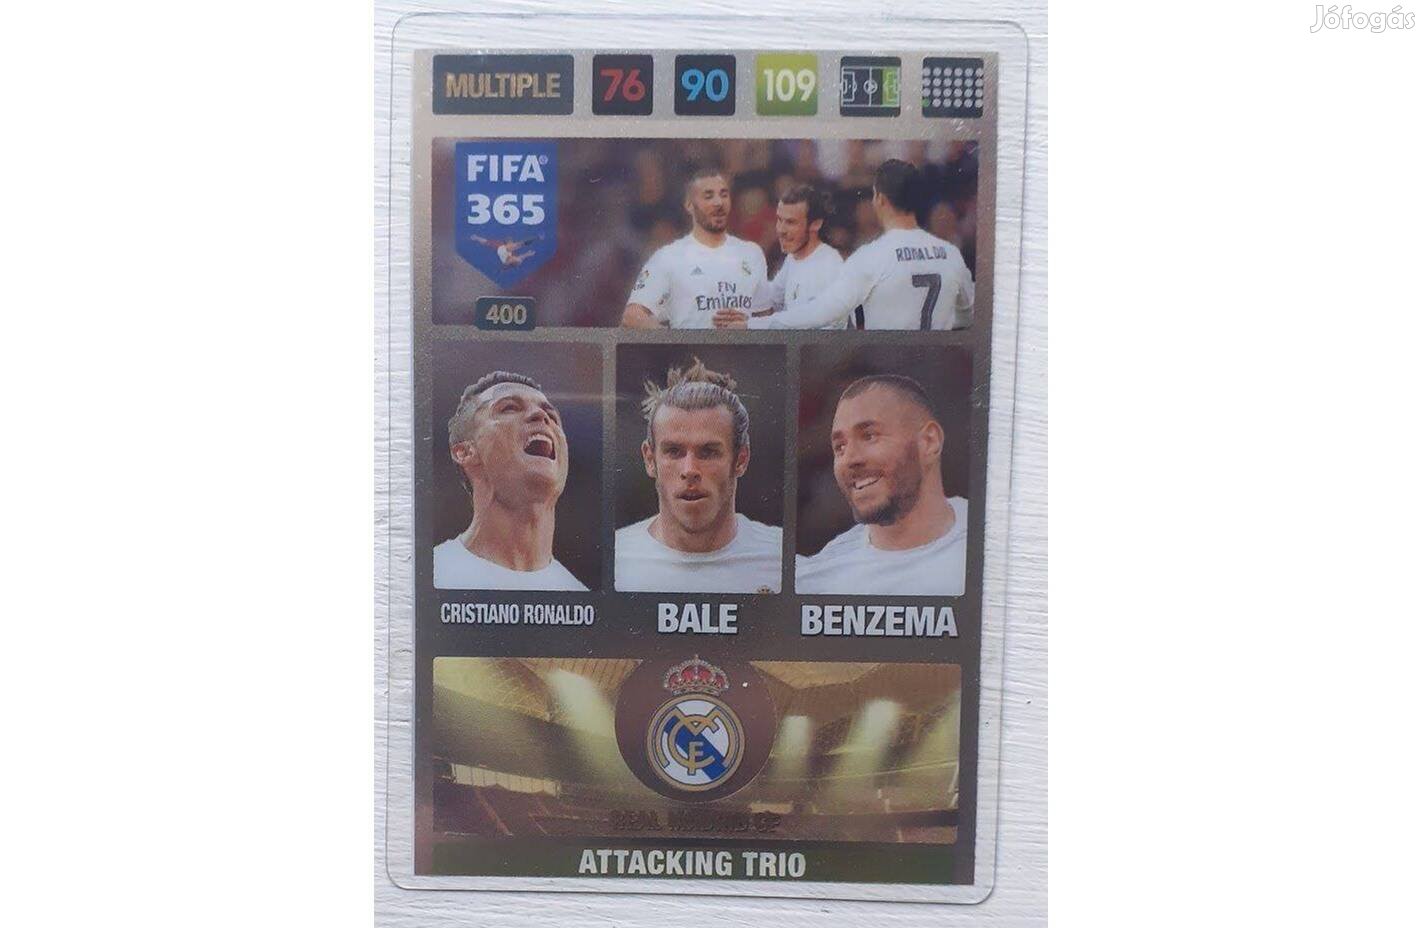 Ronaldo Benzema Bale Real Madrid Attacking Trio focis kártya FIFA 2017